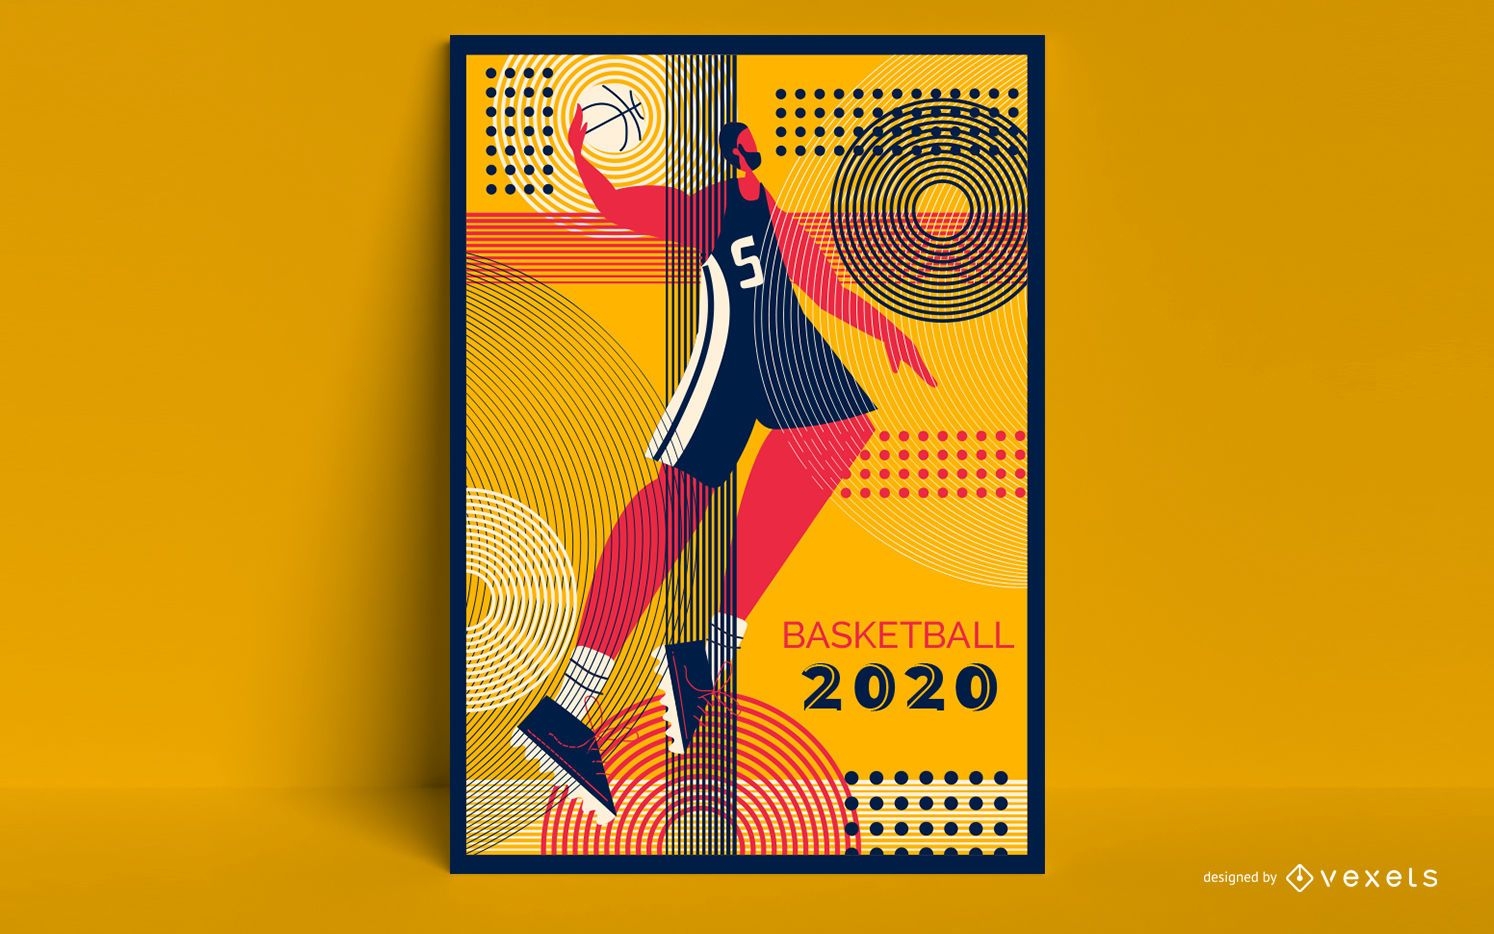 Basketball-Poster-Design